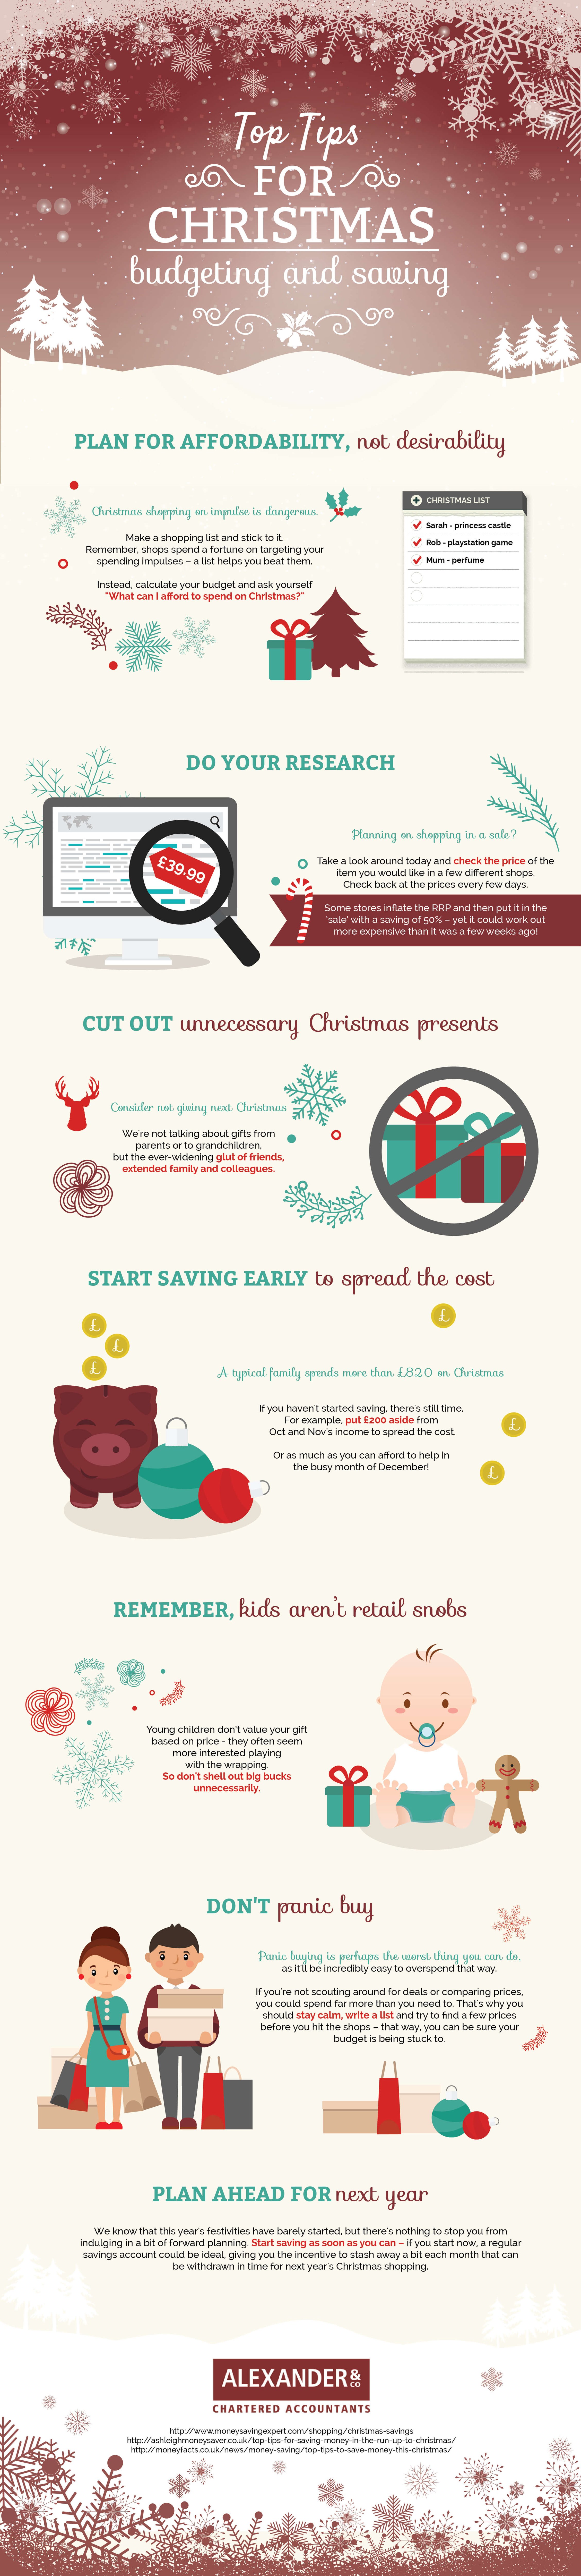 Our top tips for Christmas budgeting and saving